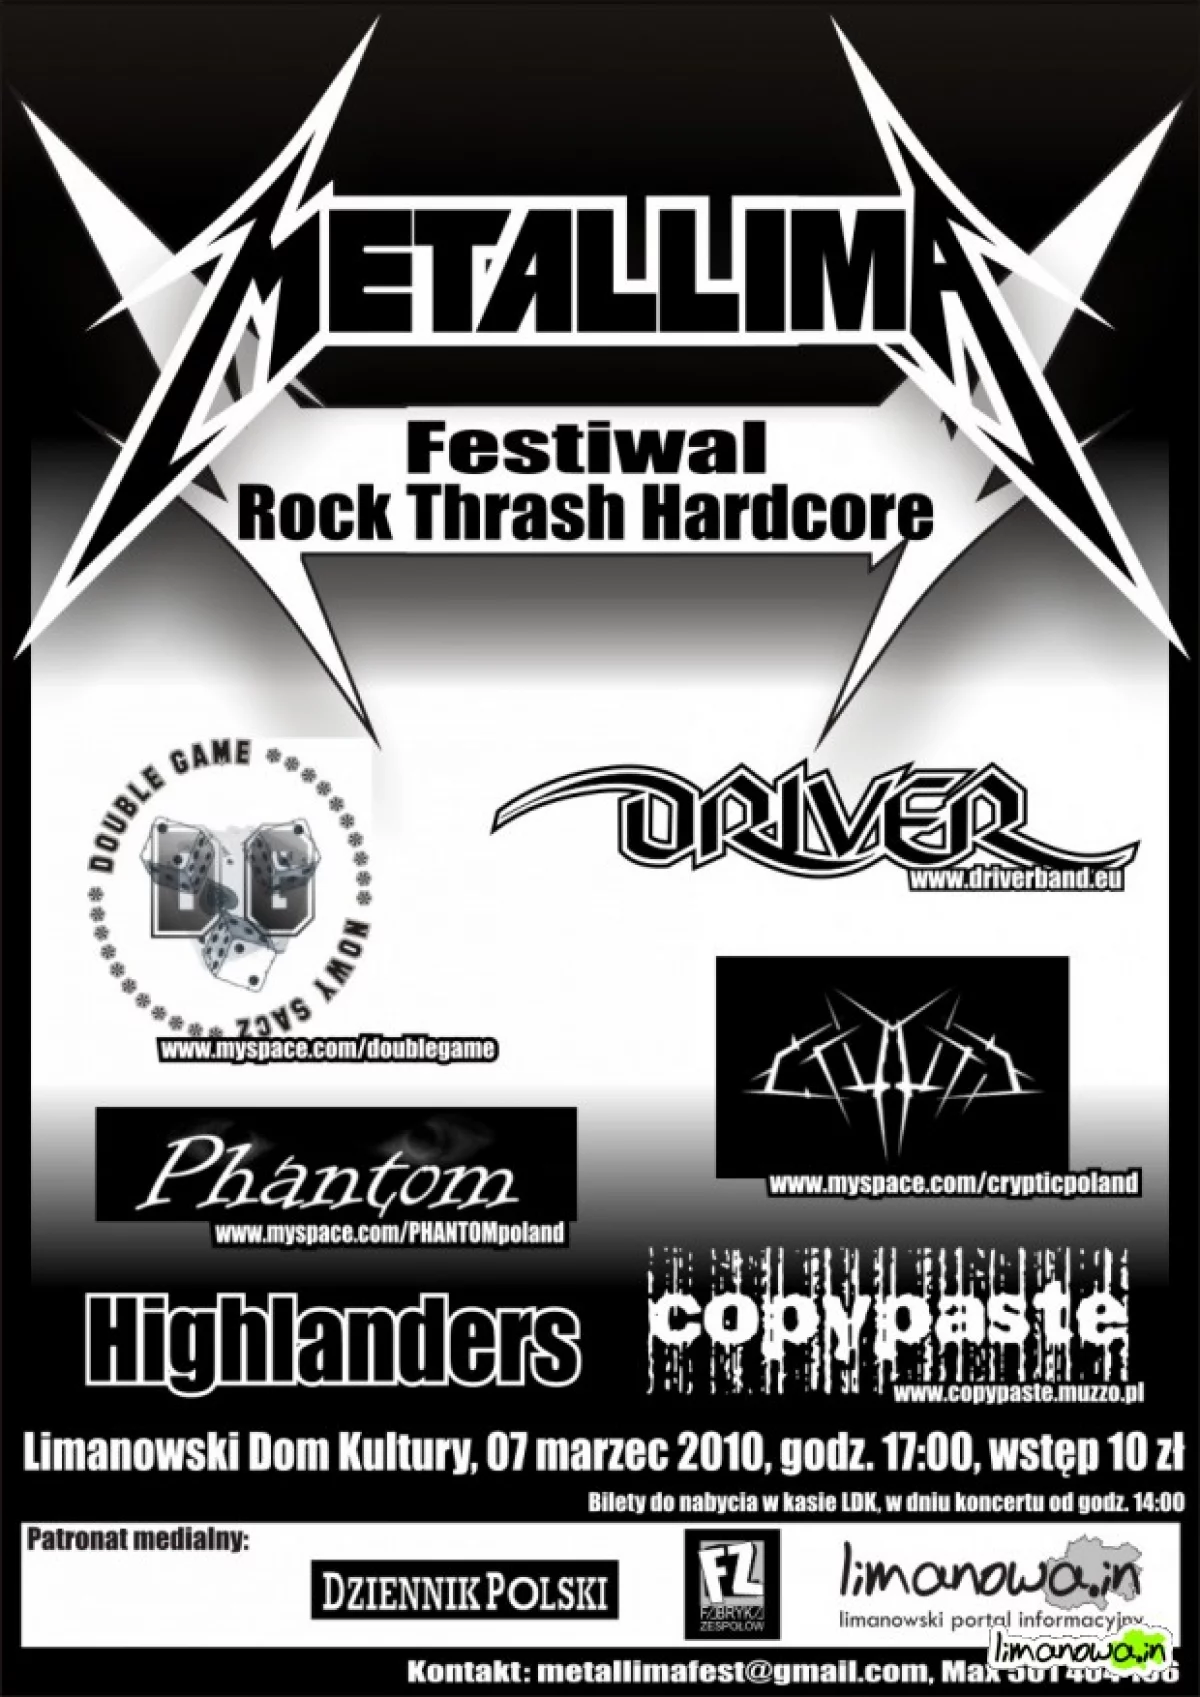 Pierwszy Festiwal Rock Thrash Hardcore „Metallima” już jutro!